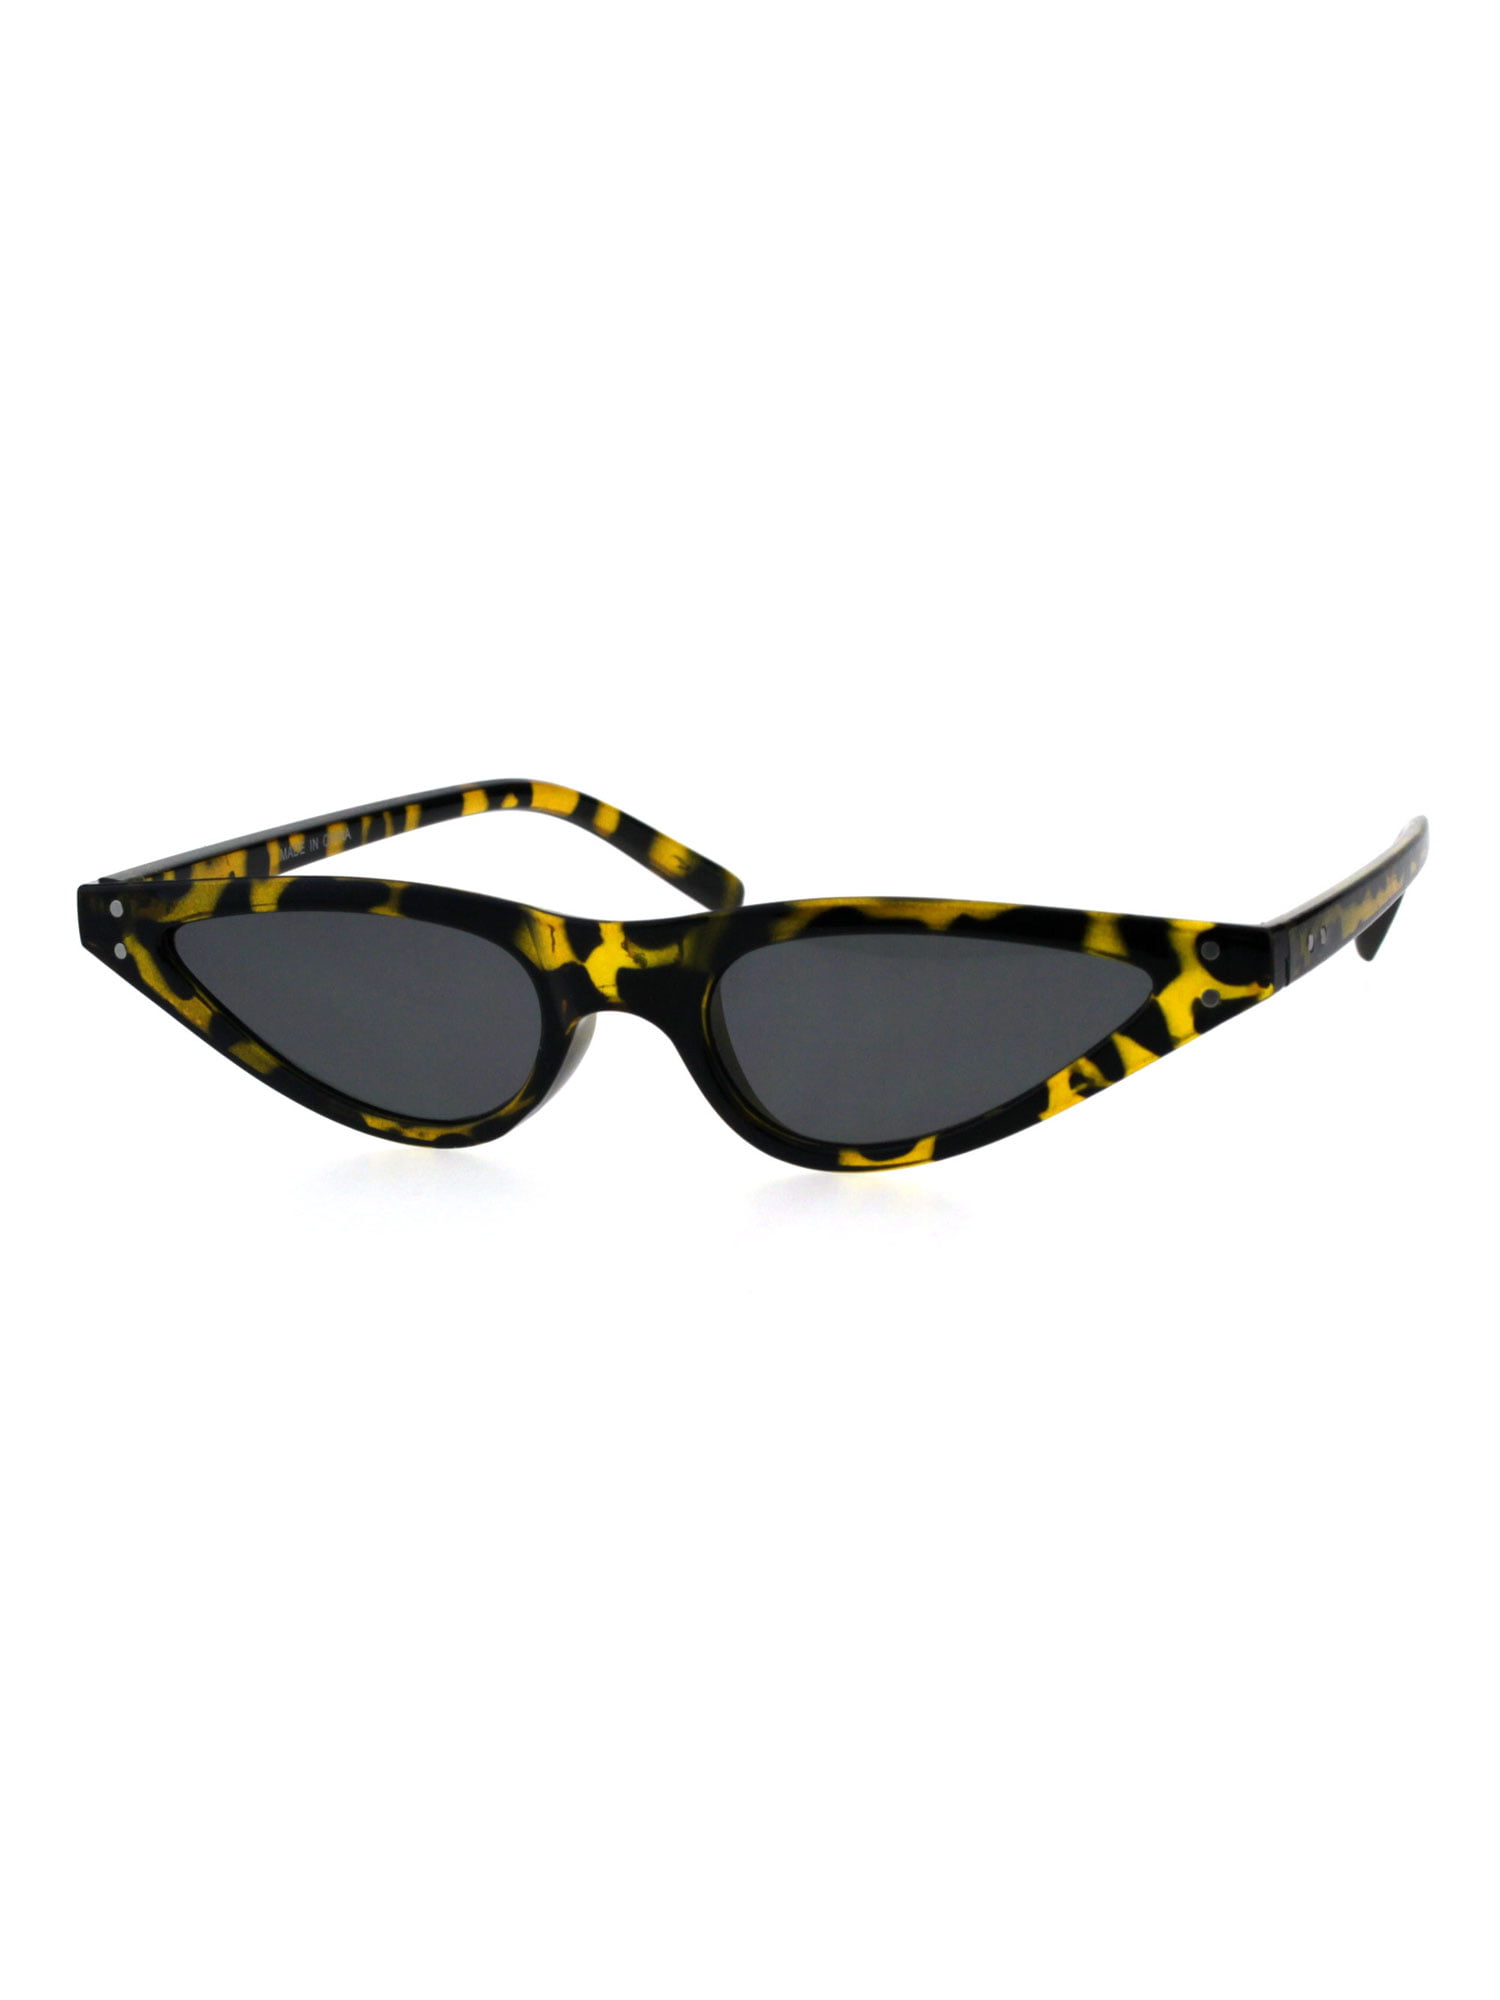 Sa106 Womens 80s Retro Vintage Goth Narrow Rectangular Cateye Sunglasses Tortoise Black